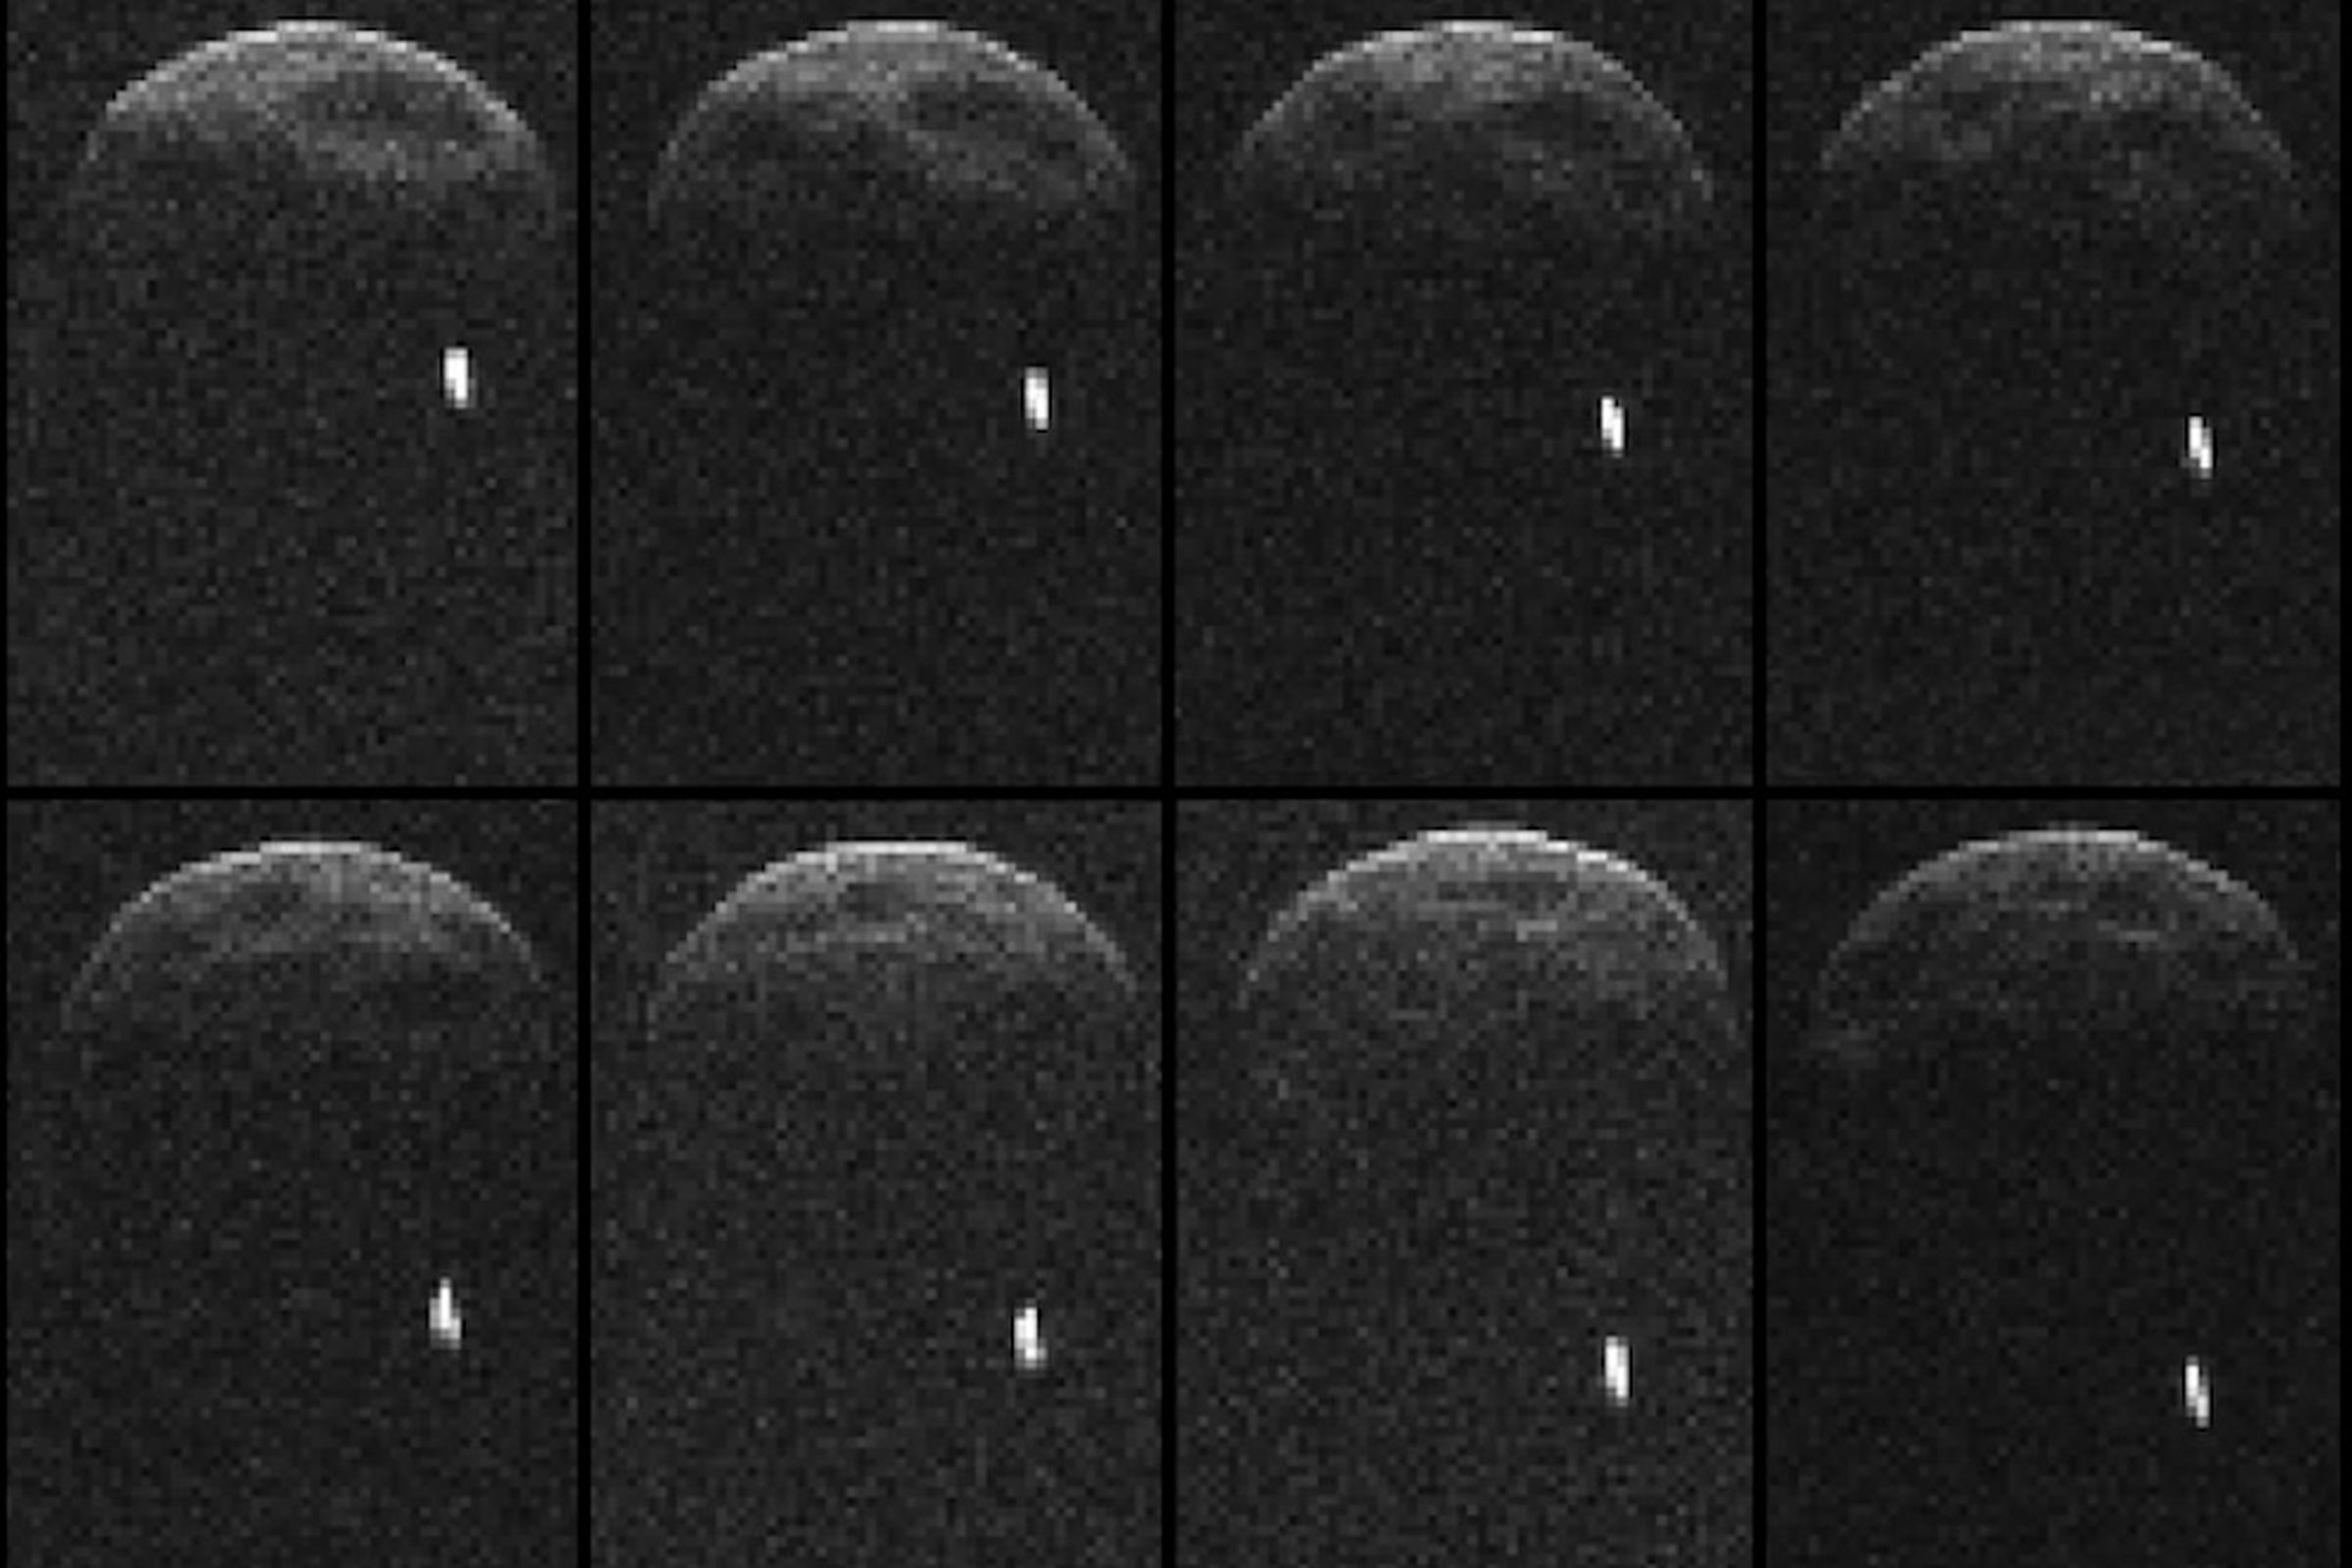 Asteroid 1998 QE2 with moon (credit: NASA/JPL-Caltech/GSSR)